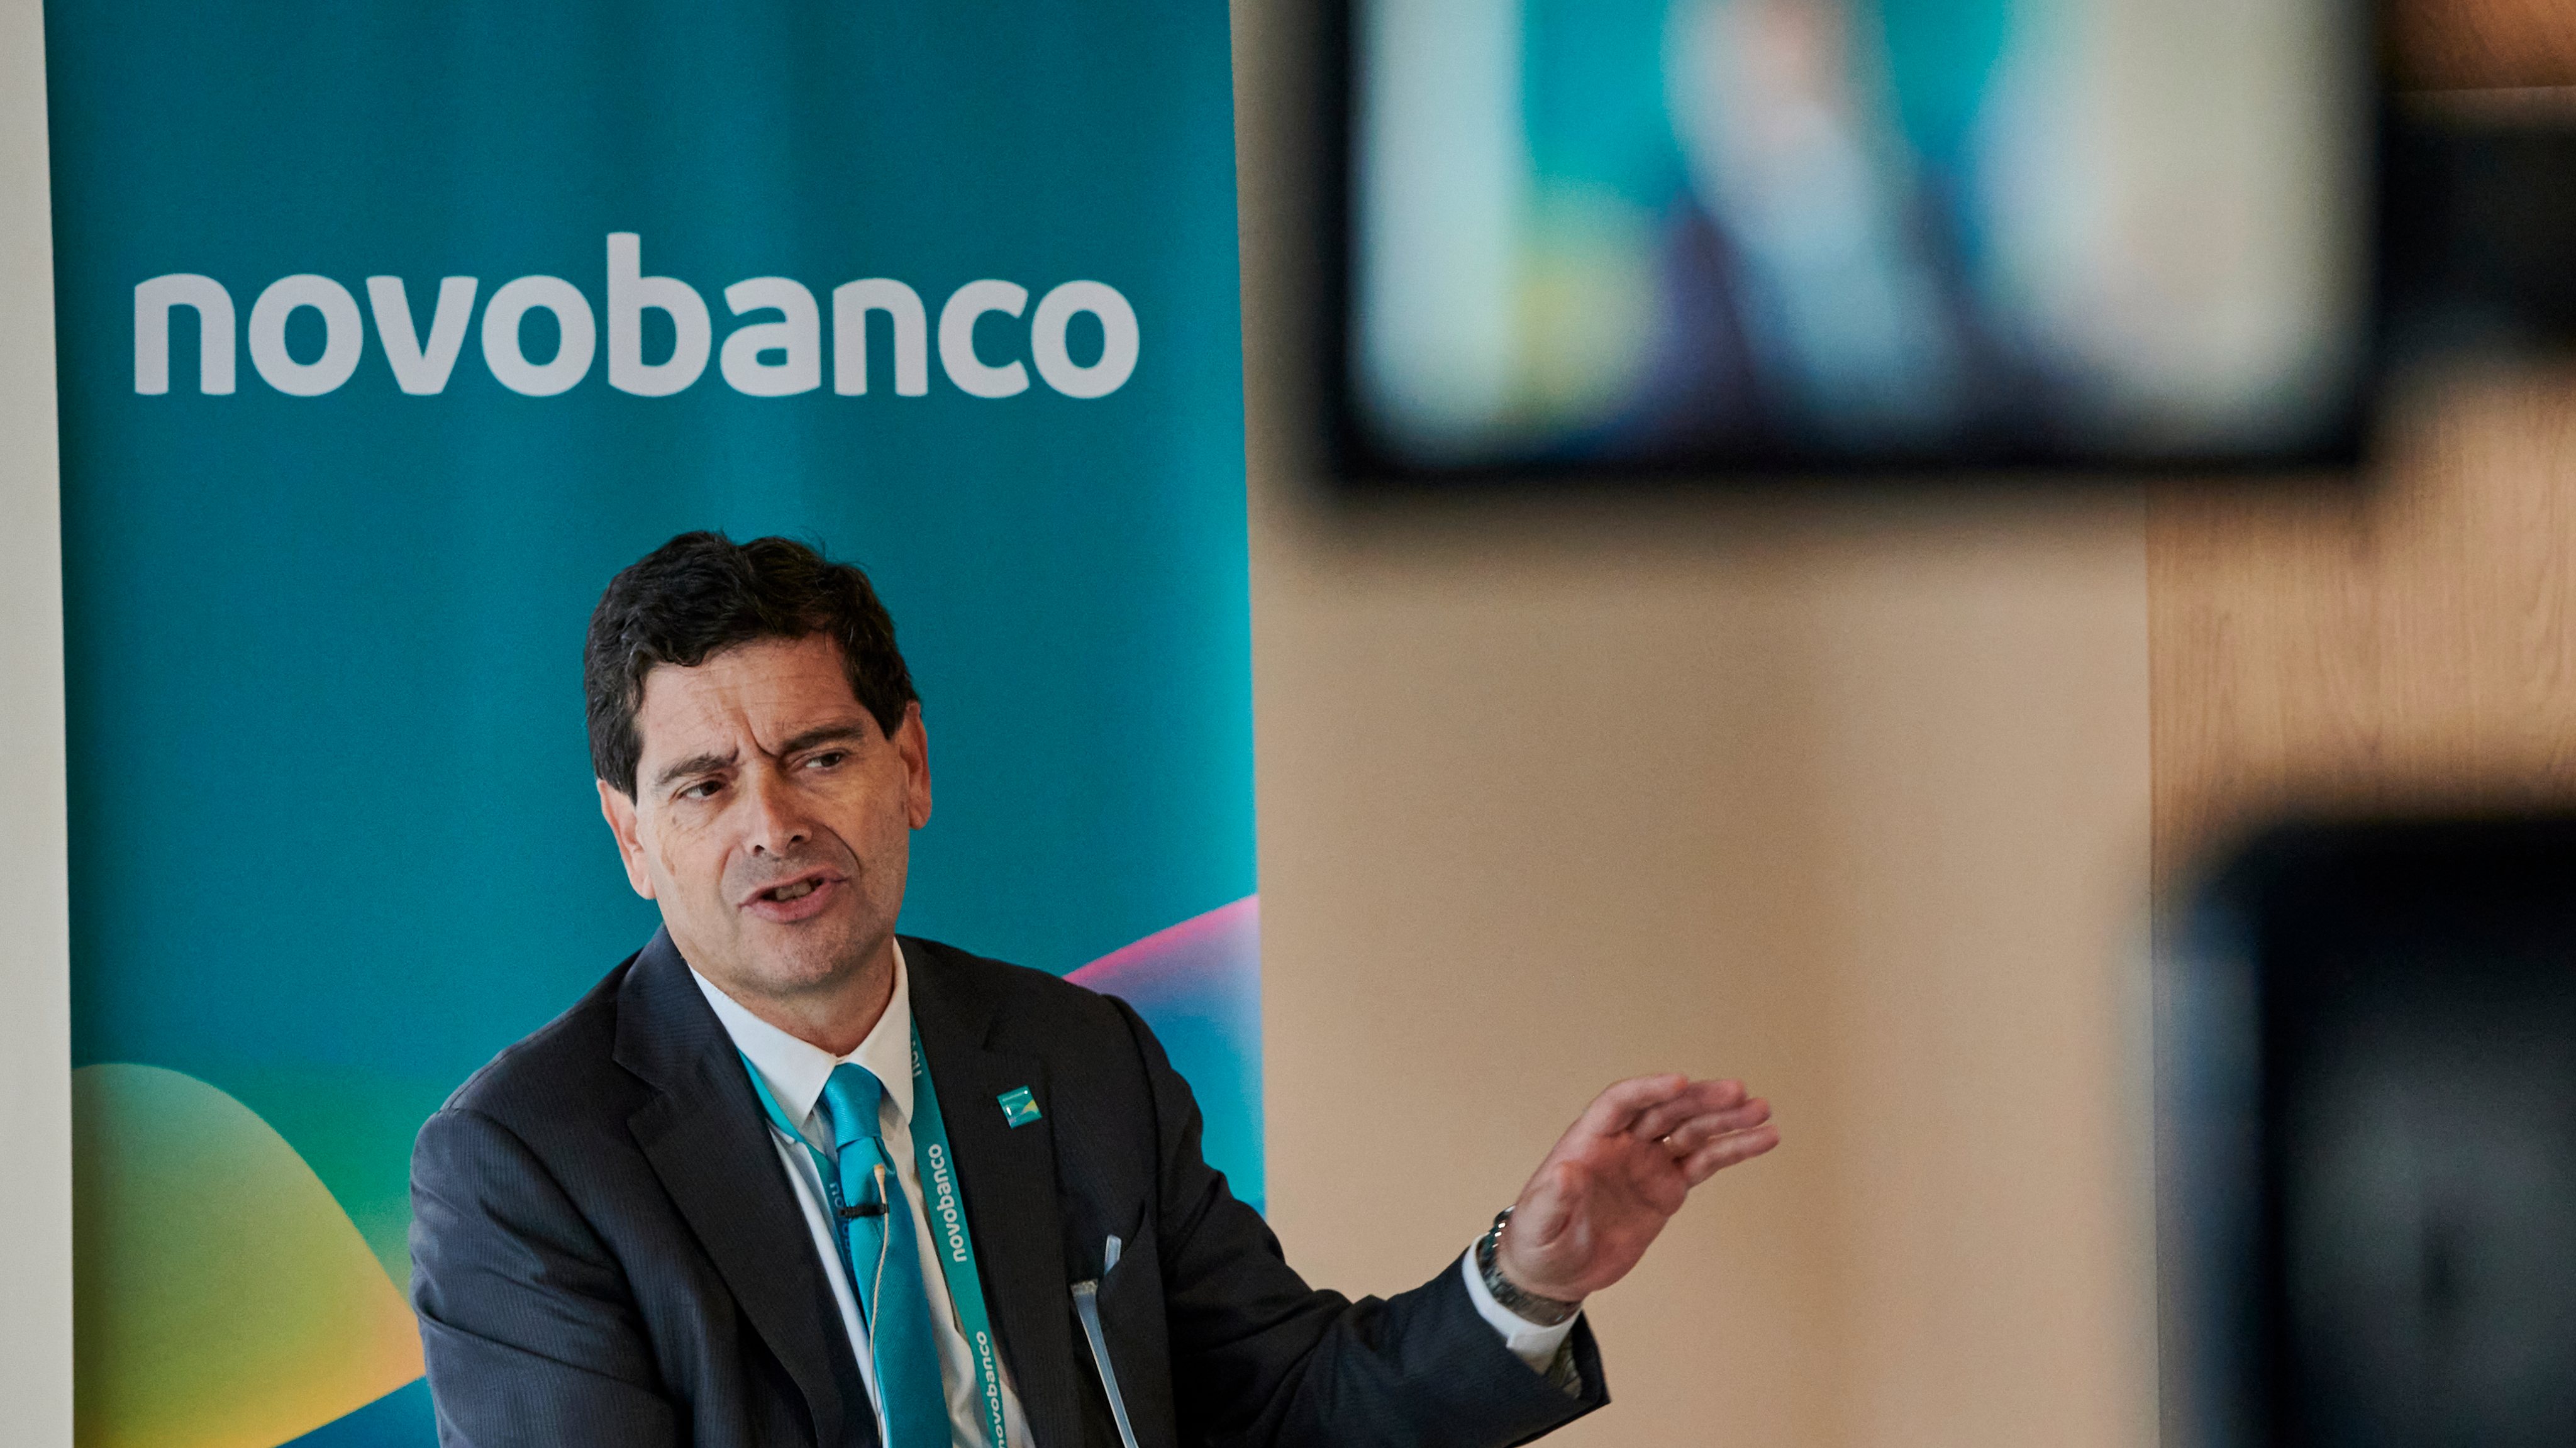 Portuguese Bank Novo Banco Changes Name Into &quot;novobanco&quot; And Presents New Corporate Logo